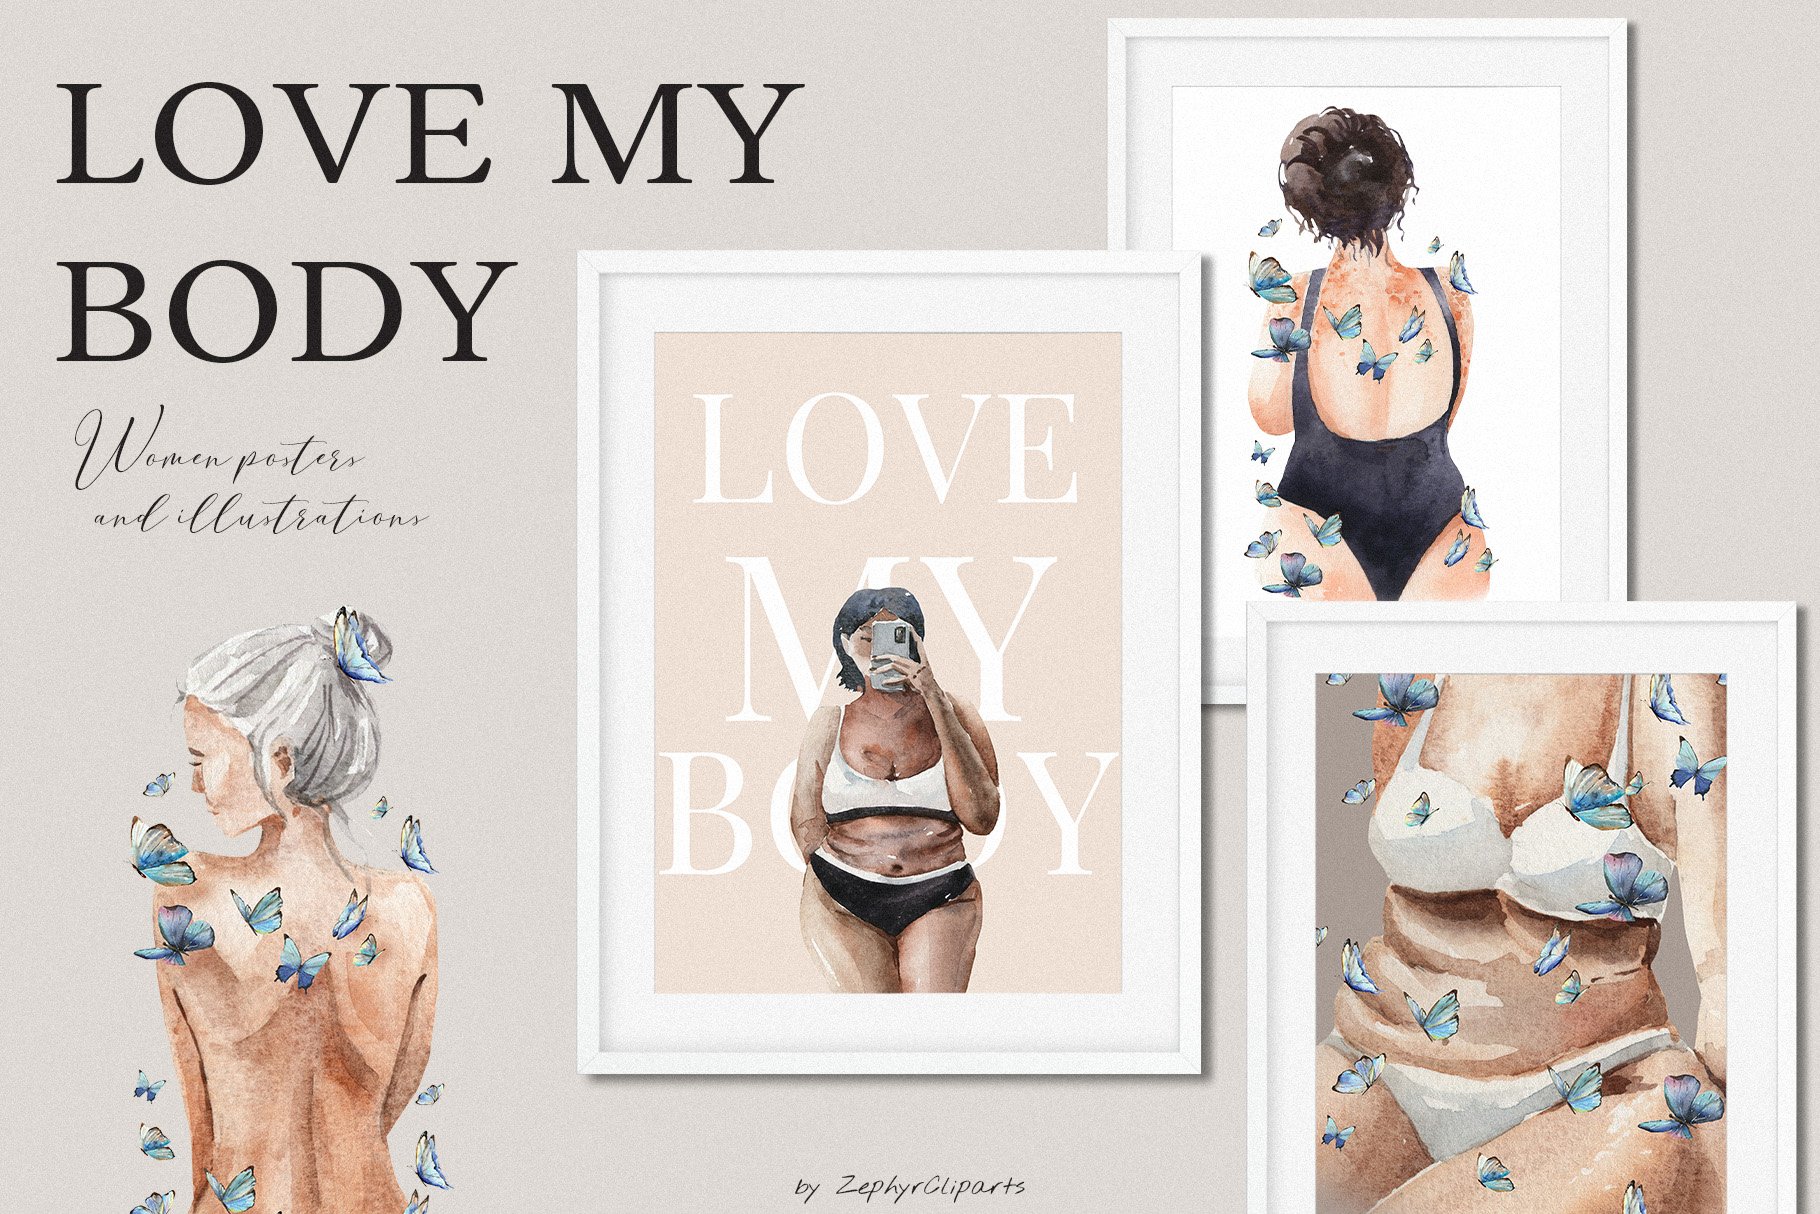 https://designcuts.b-cdn.net/wp-content/uploads/2023/02/Jkkmeb6k-love-my-body-body-positive-art.jpg